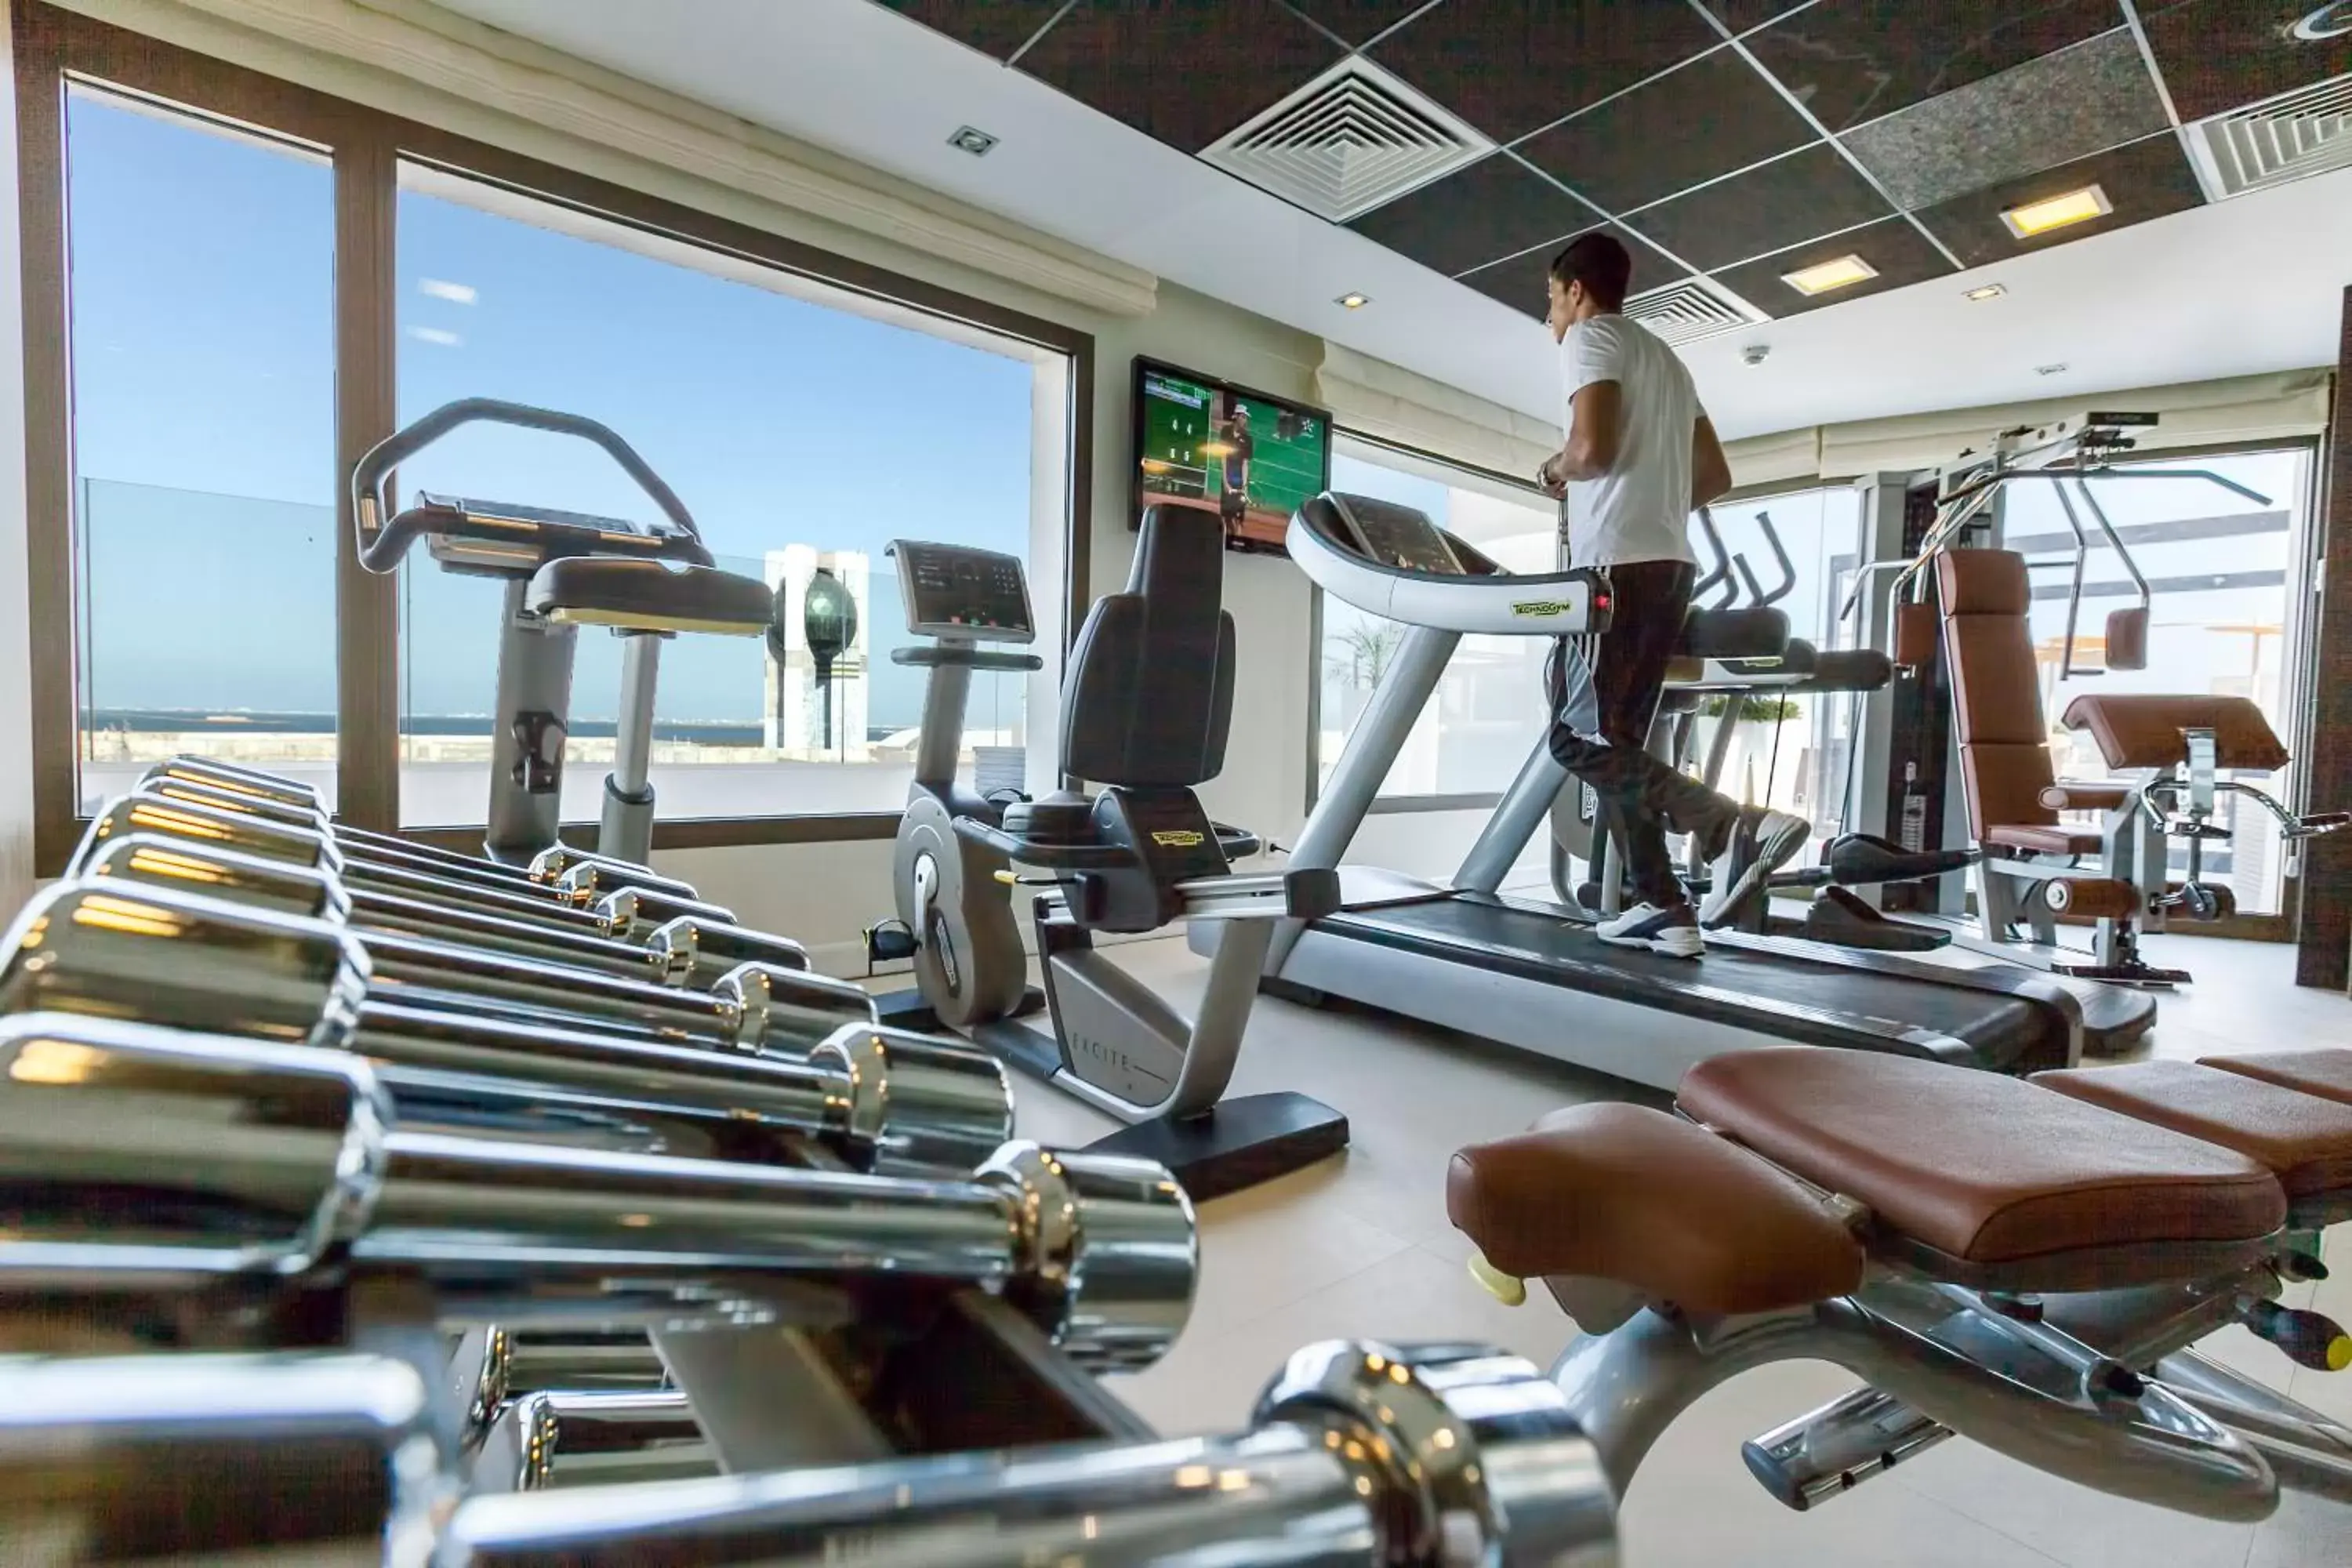 Fitness centre/facilities, Fitness Center/Facilities in Novotel Tunis